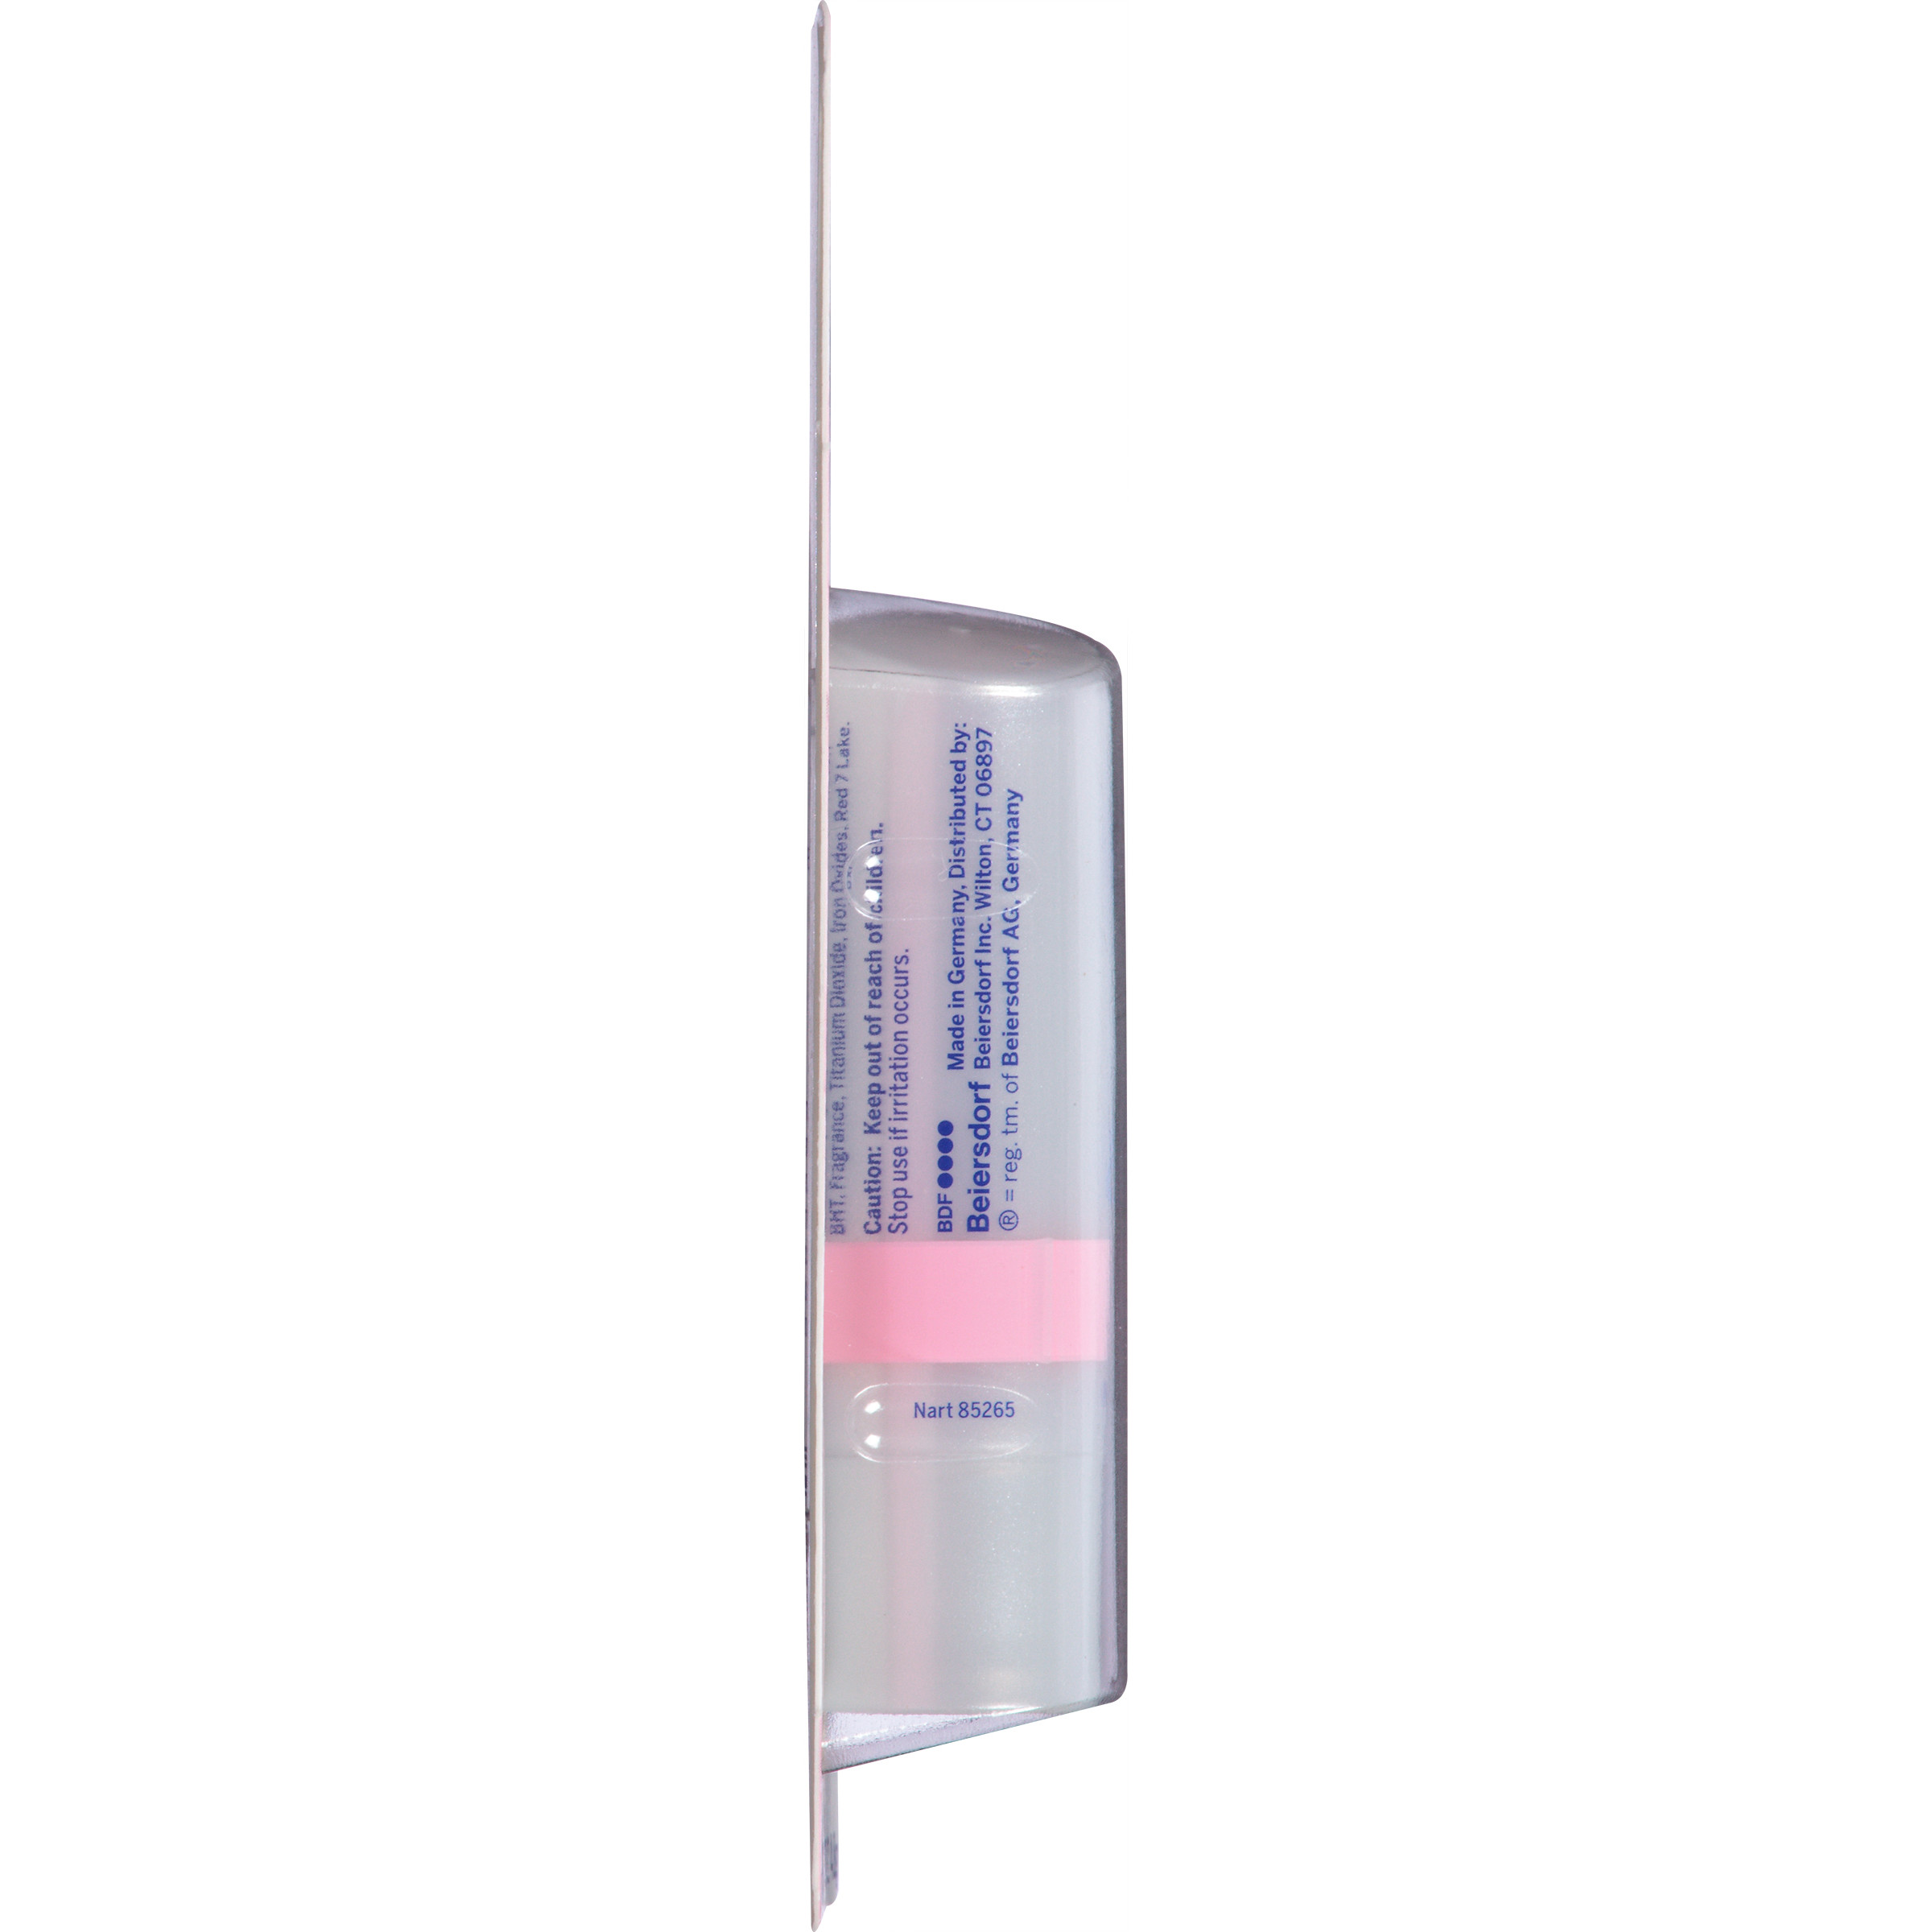 NIVEA Care & Color Sheer Lip Care, Pink, 0.17 Oz - image 4 of 4